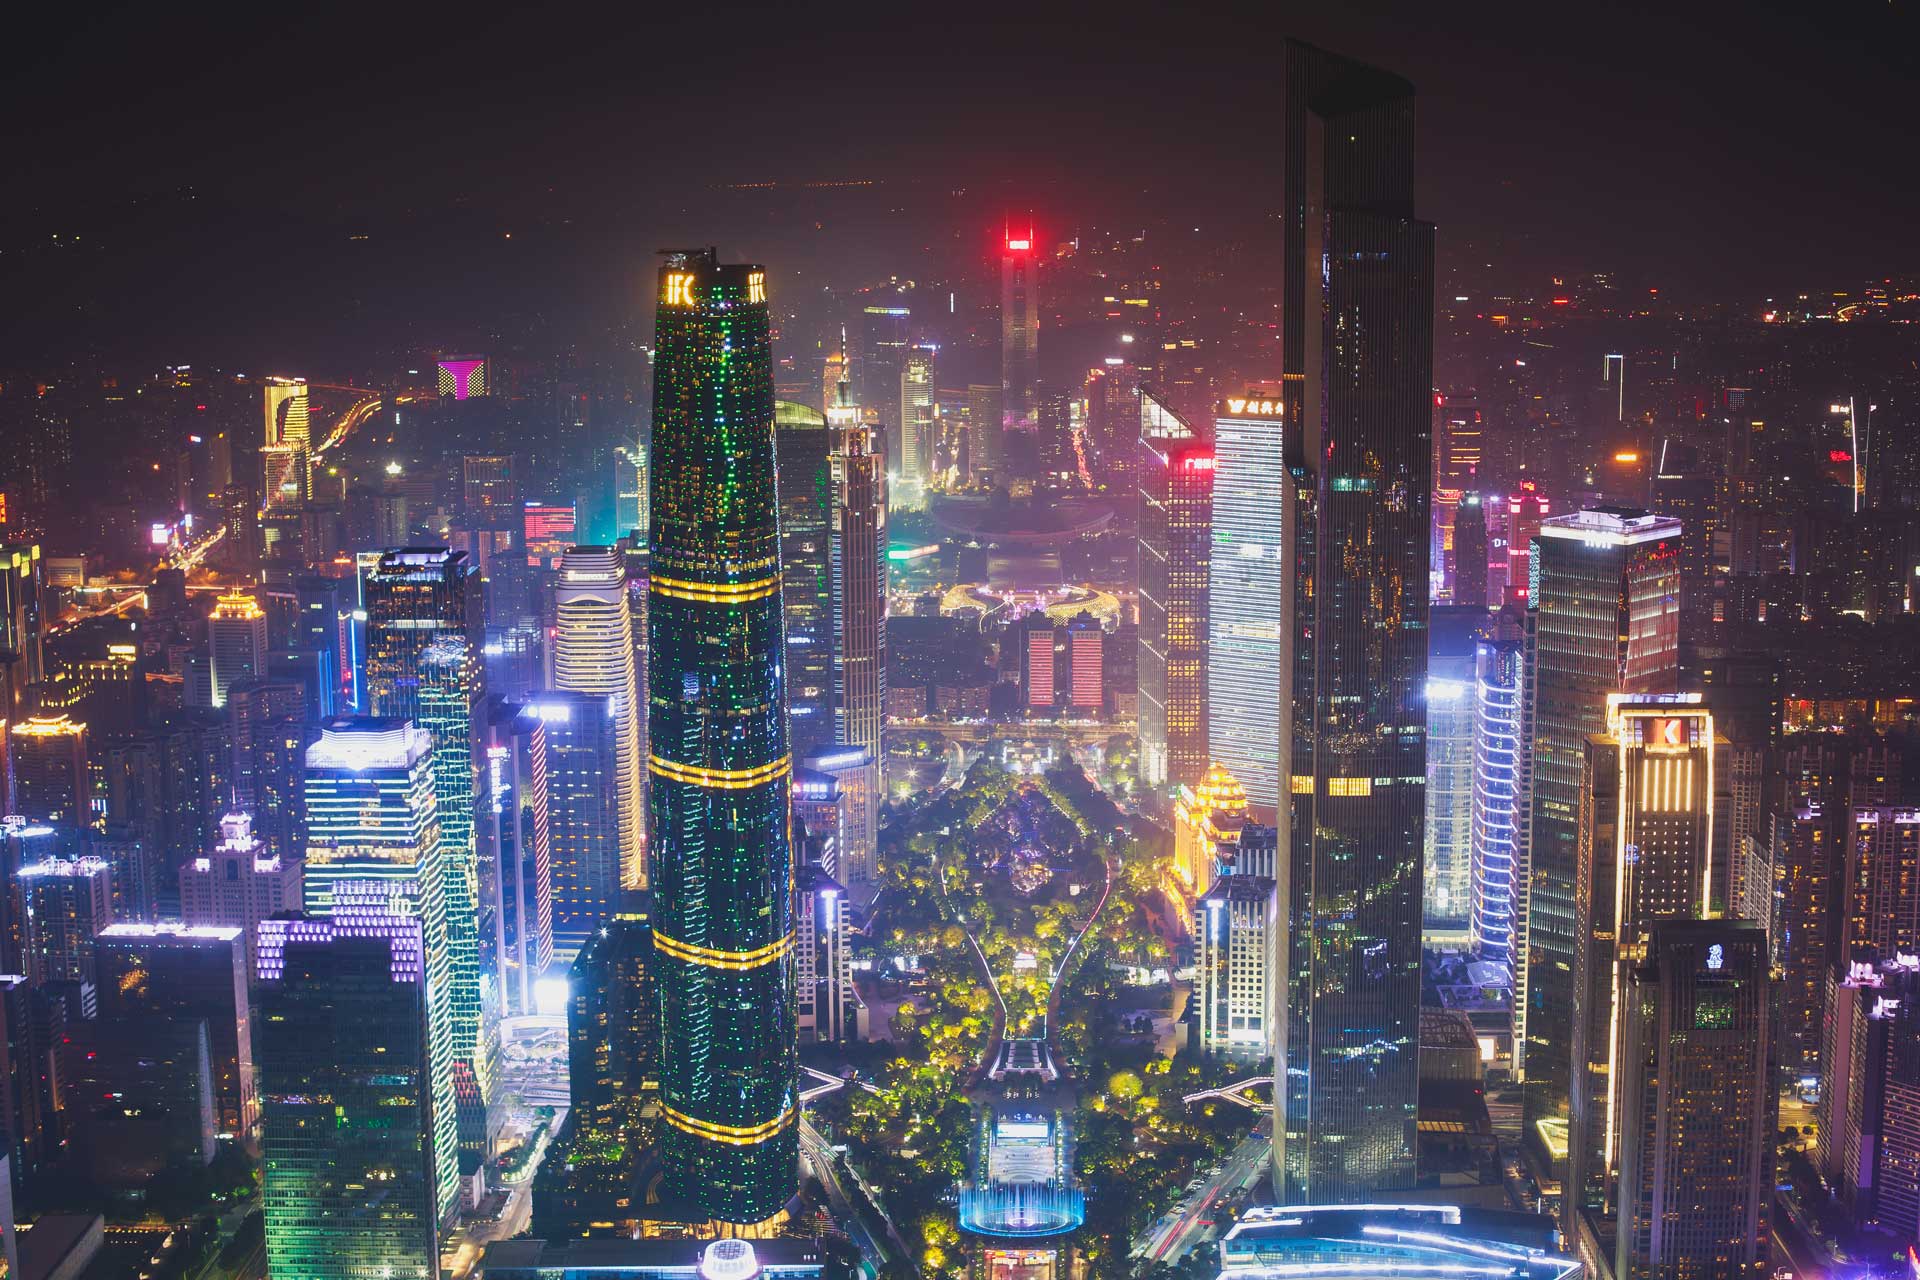 Guangzhou's cyberpunk-esque cityscape